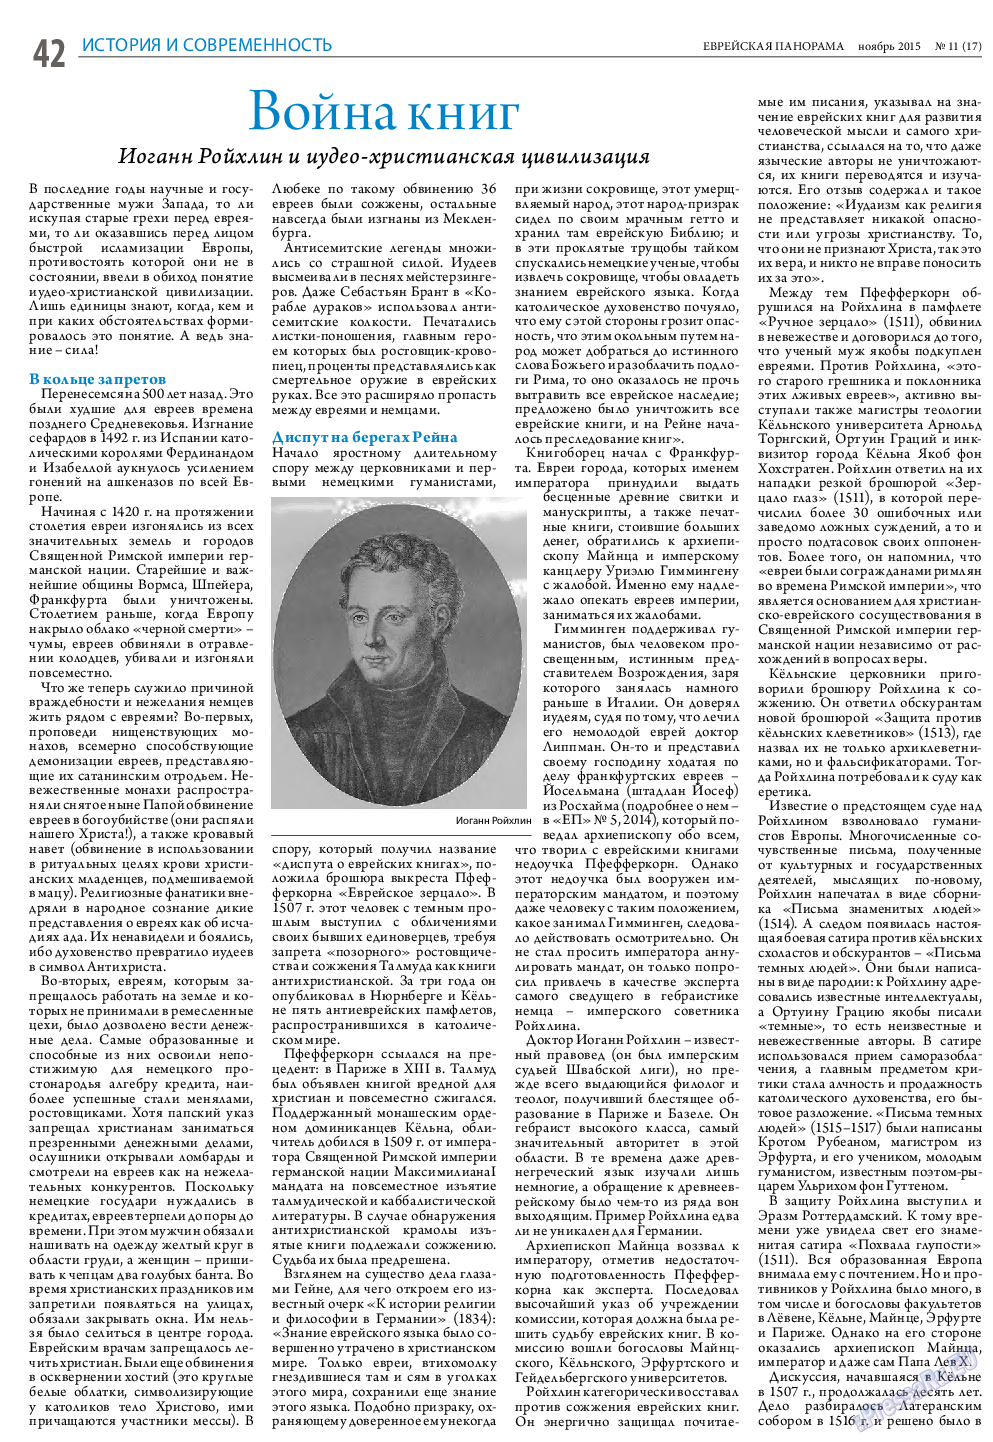 Еврейская панорама, газета. 2015 №11 стр.42